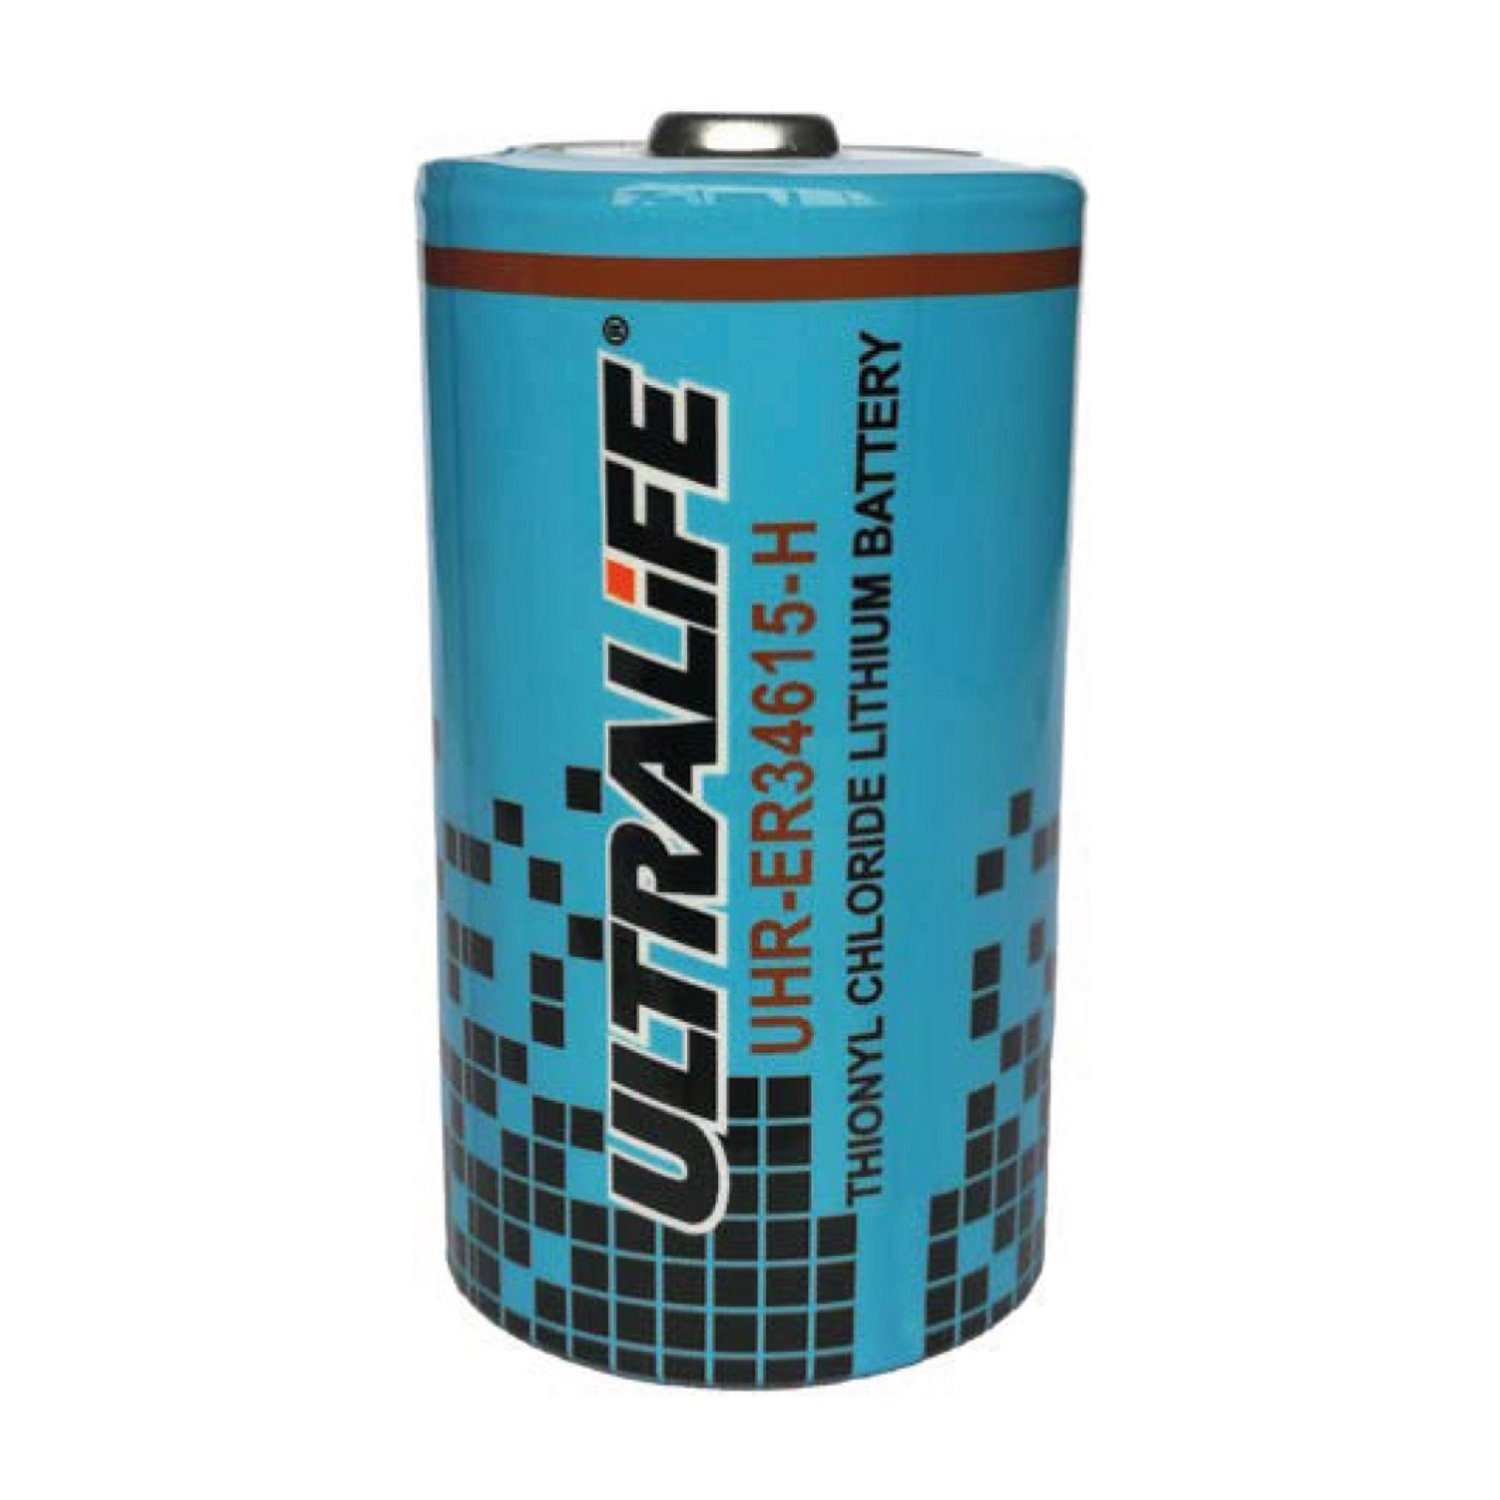 Karriereentwicklung UltraLife UHR-ER34615-H Ultralife Lithium 3,6 Zelle D Ah 14,5 Volt Hoc Batterie Batterie